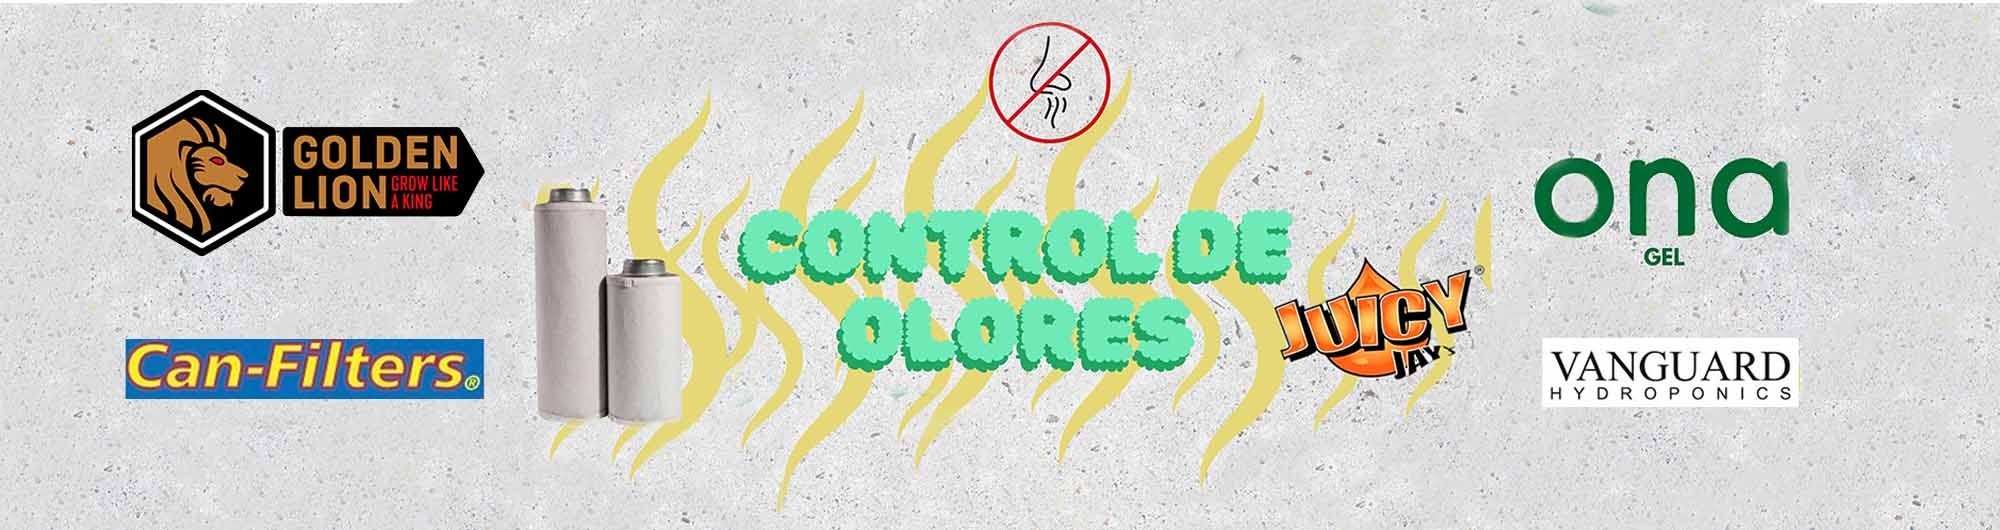 SLIDER CONTROL OLORES